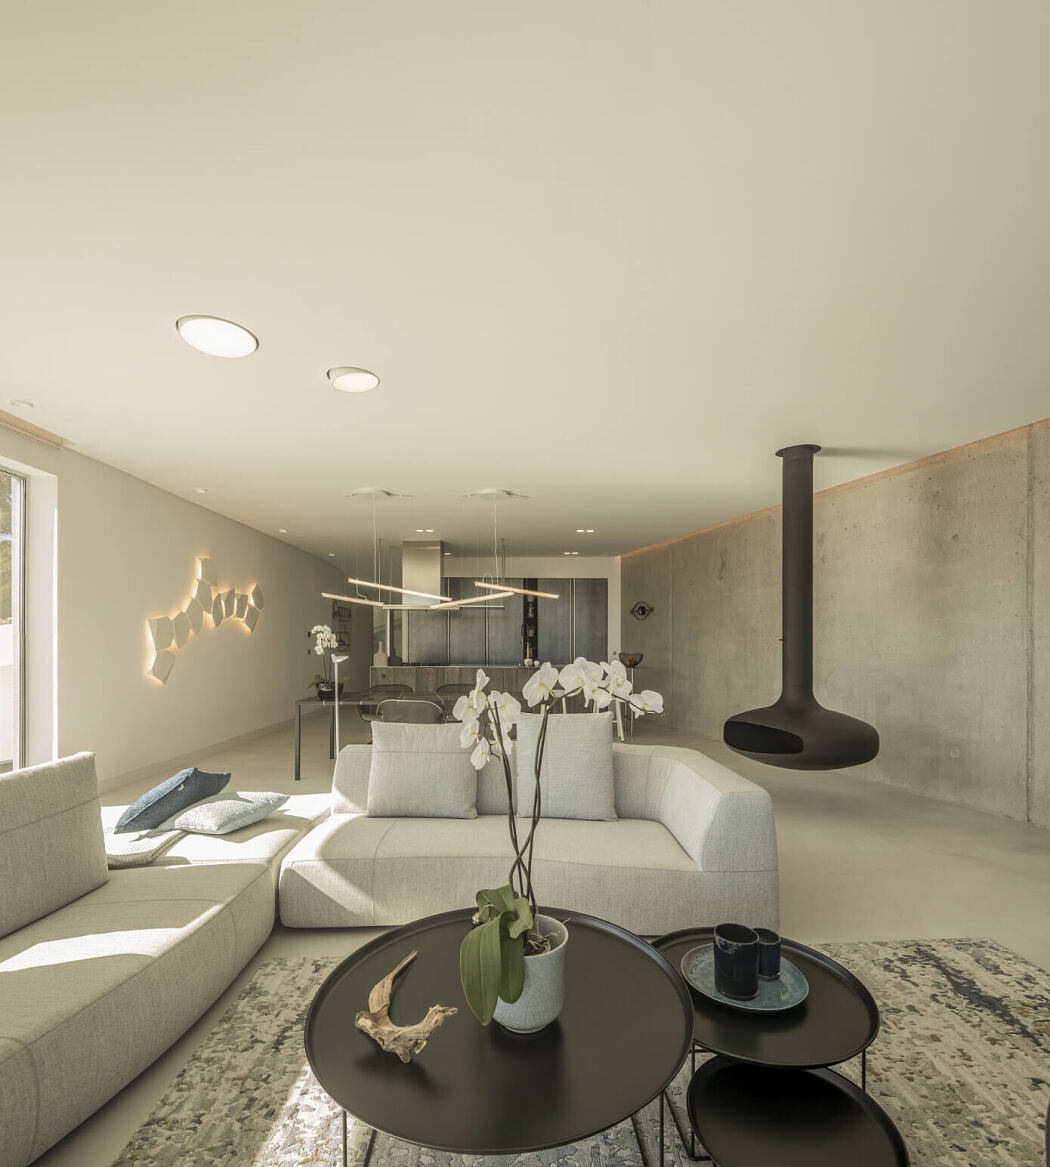 Dorfler House by Vitor Vilhena Architects homeadore.com/2021/01/20/dor… #architecture #decoration #interiordesign #home